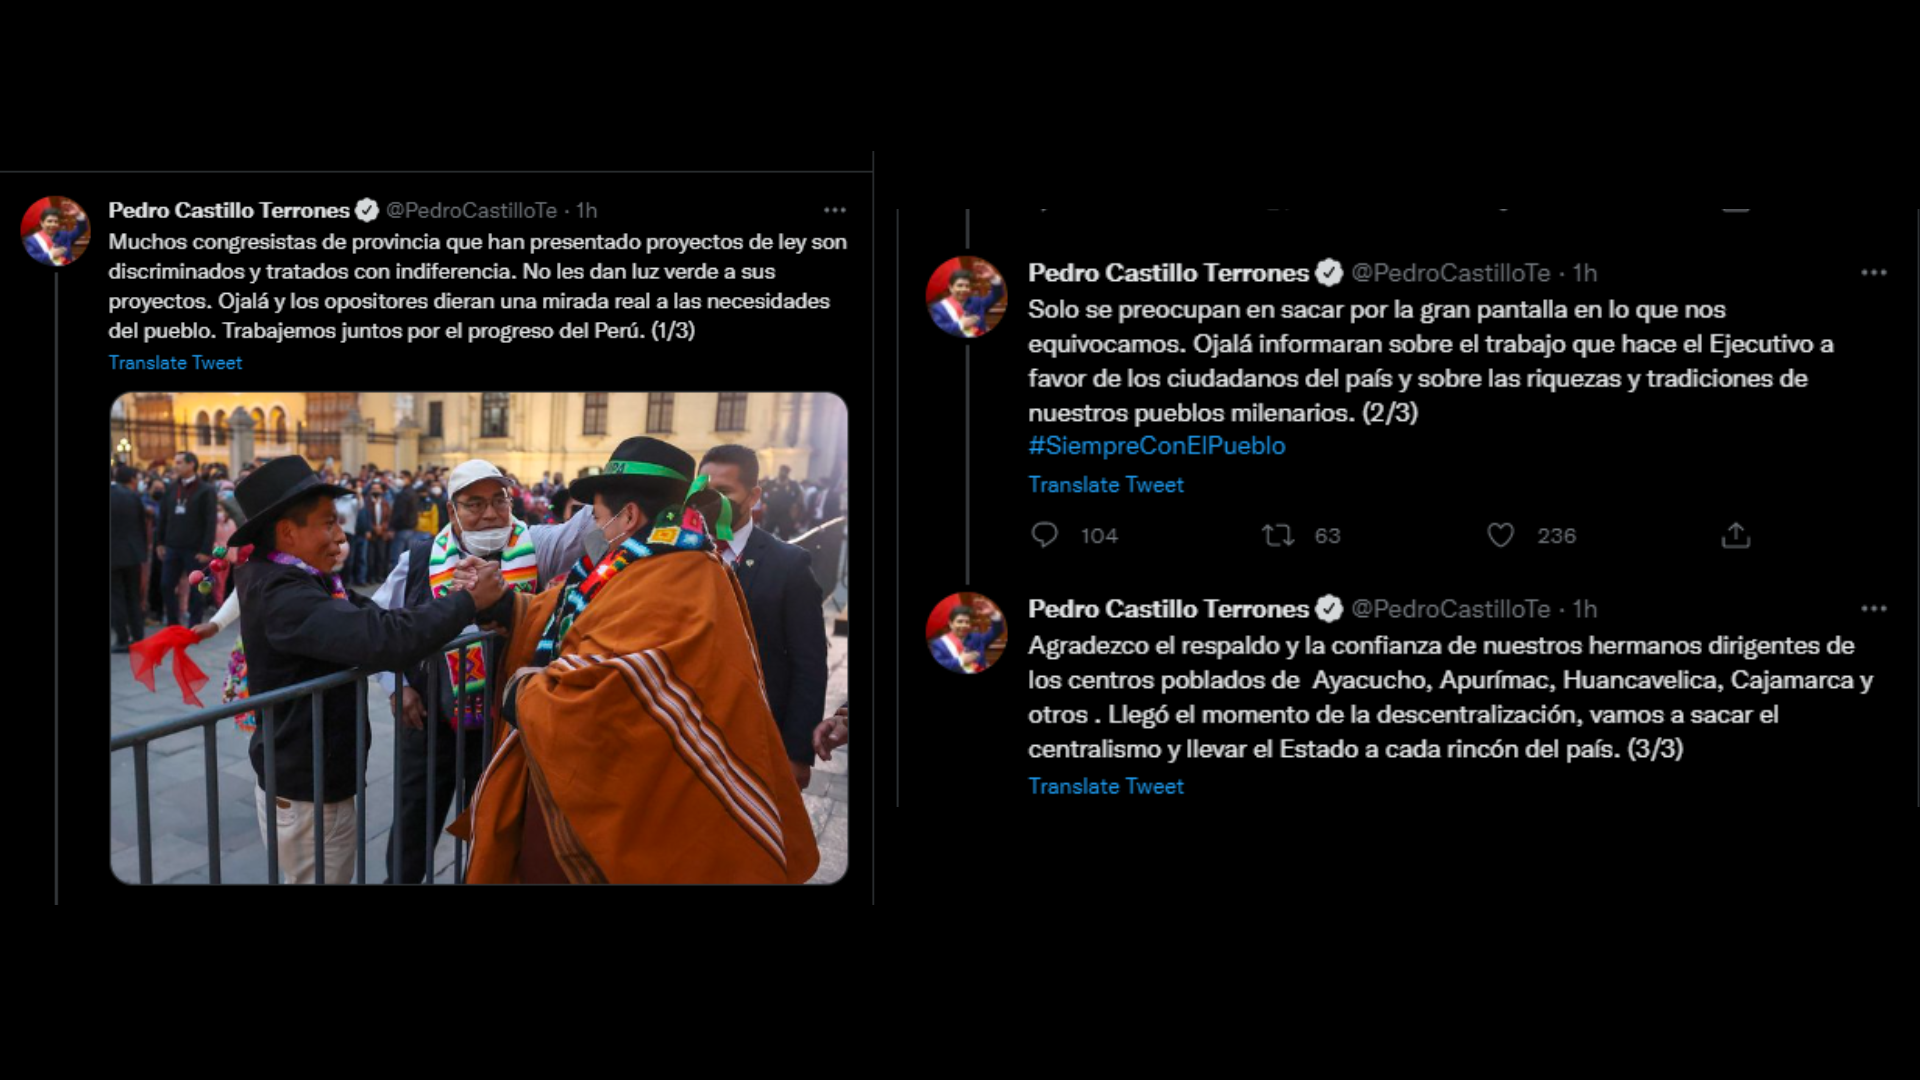 Twitter del presidente Pedro Castillo.